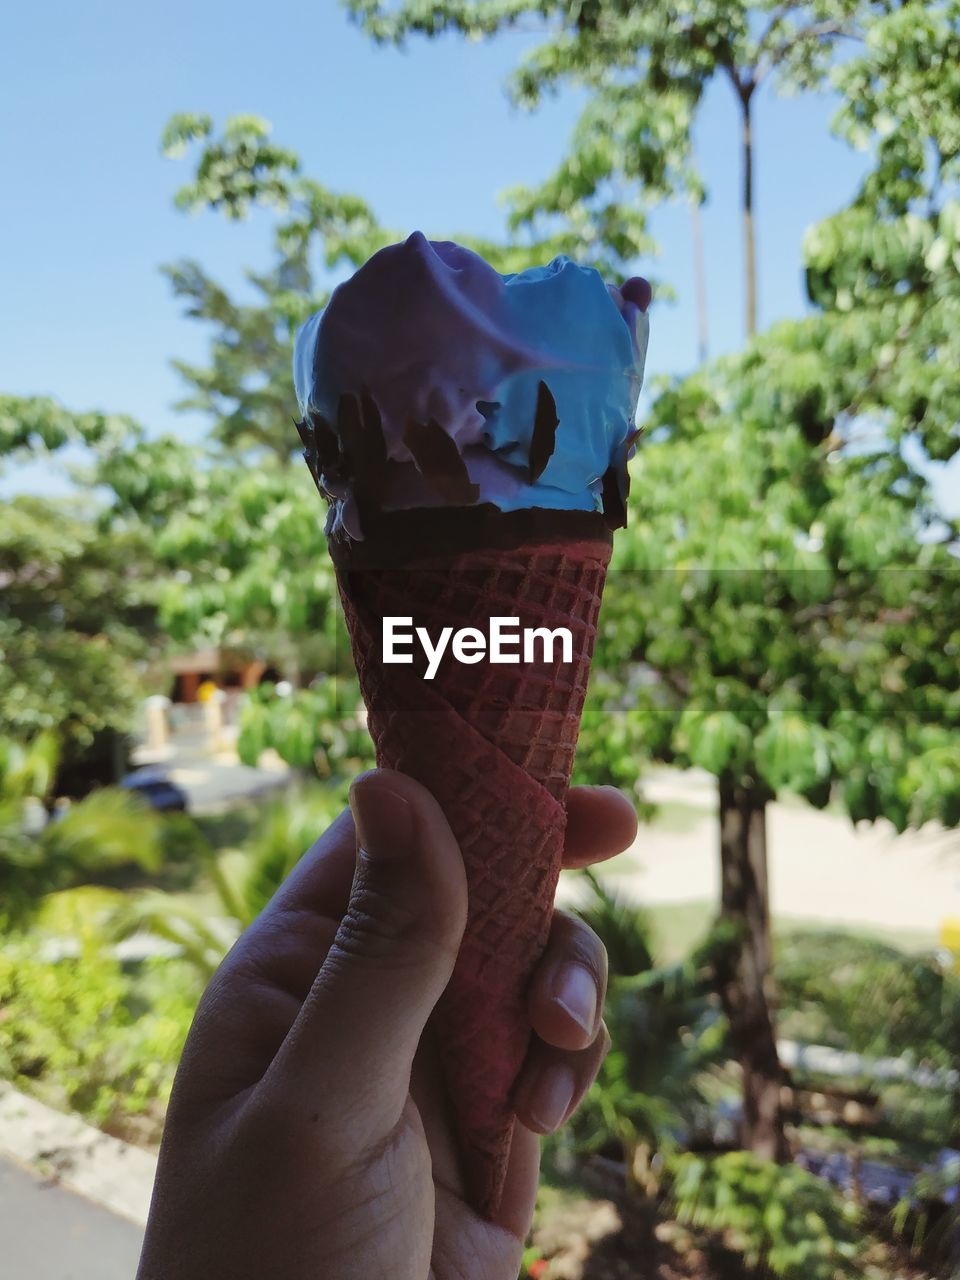 Hand of a person holding ice cream cone